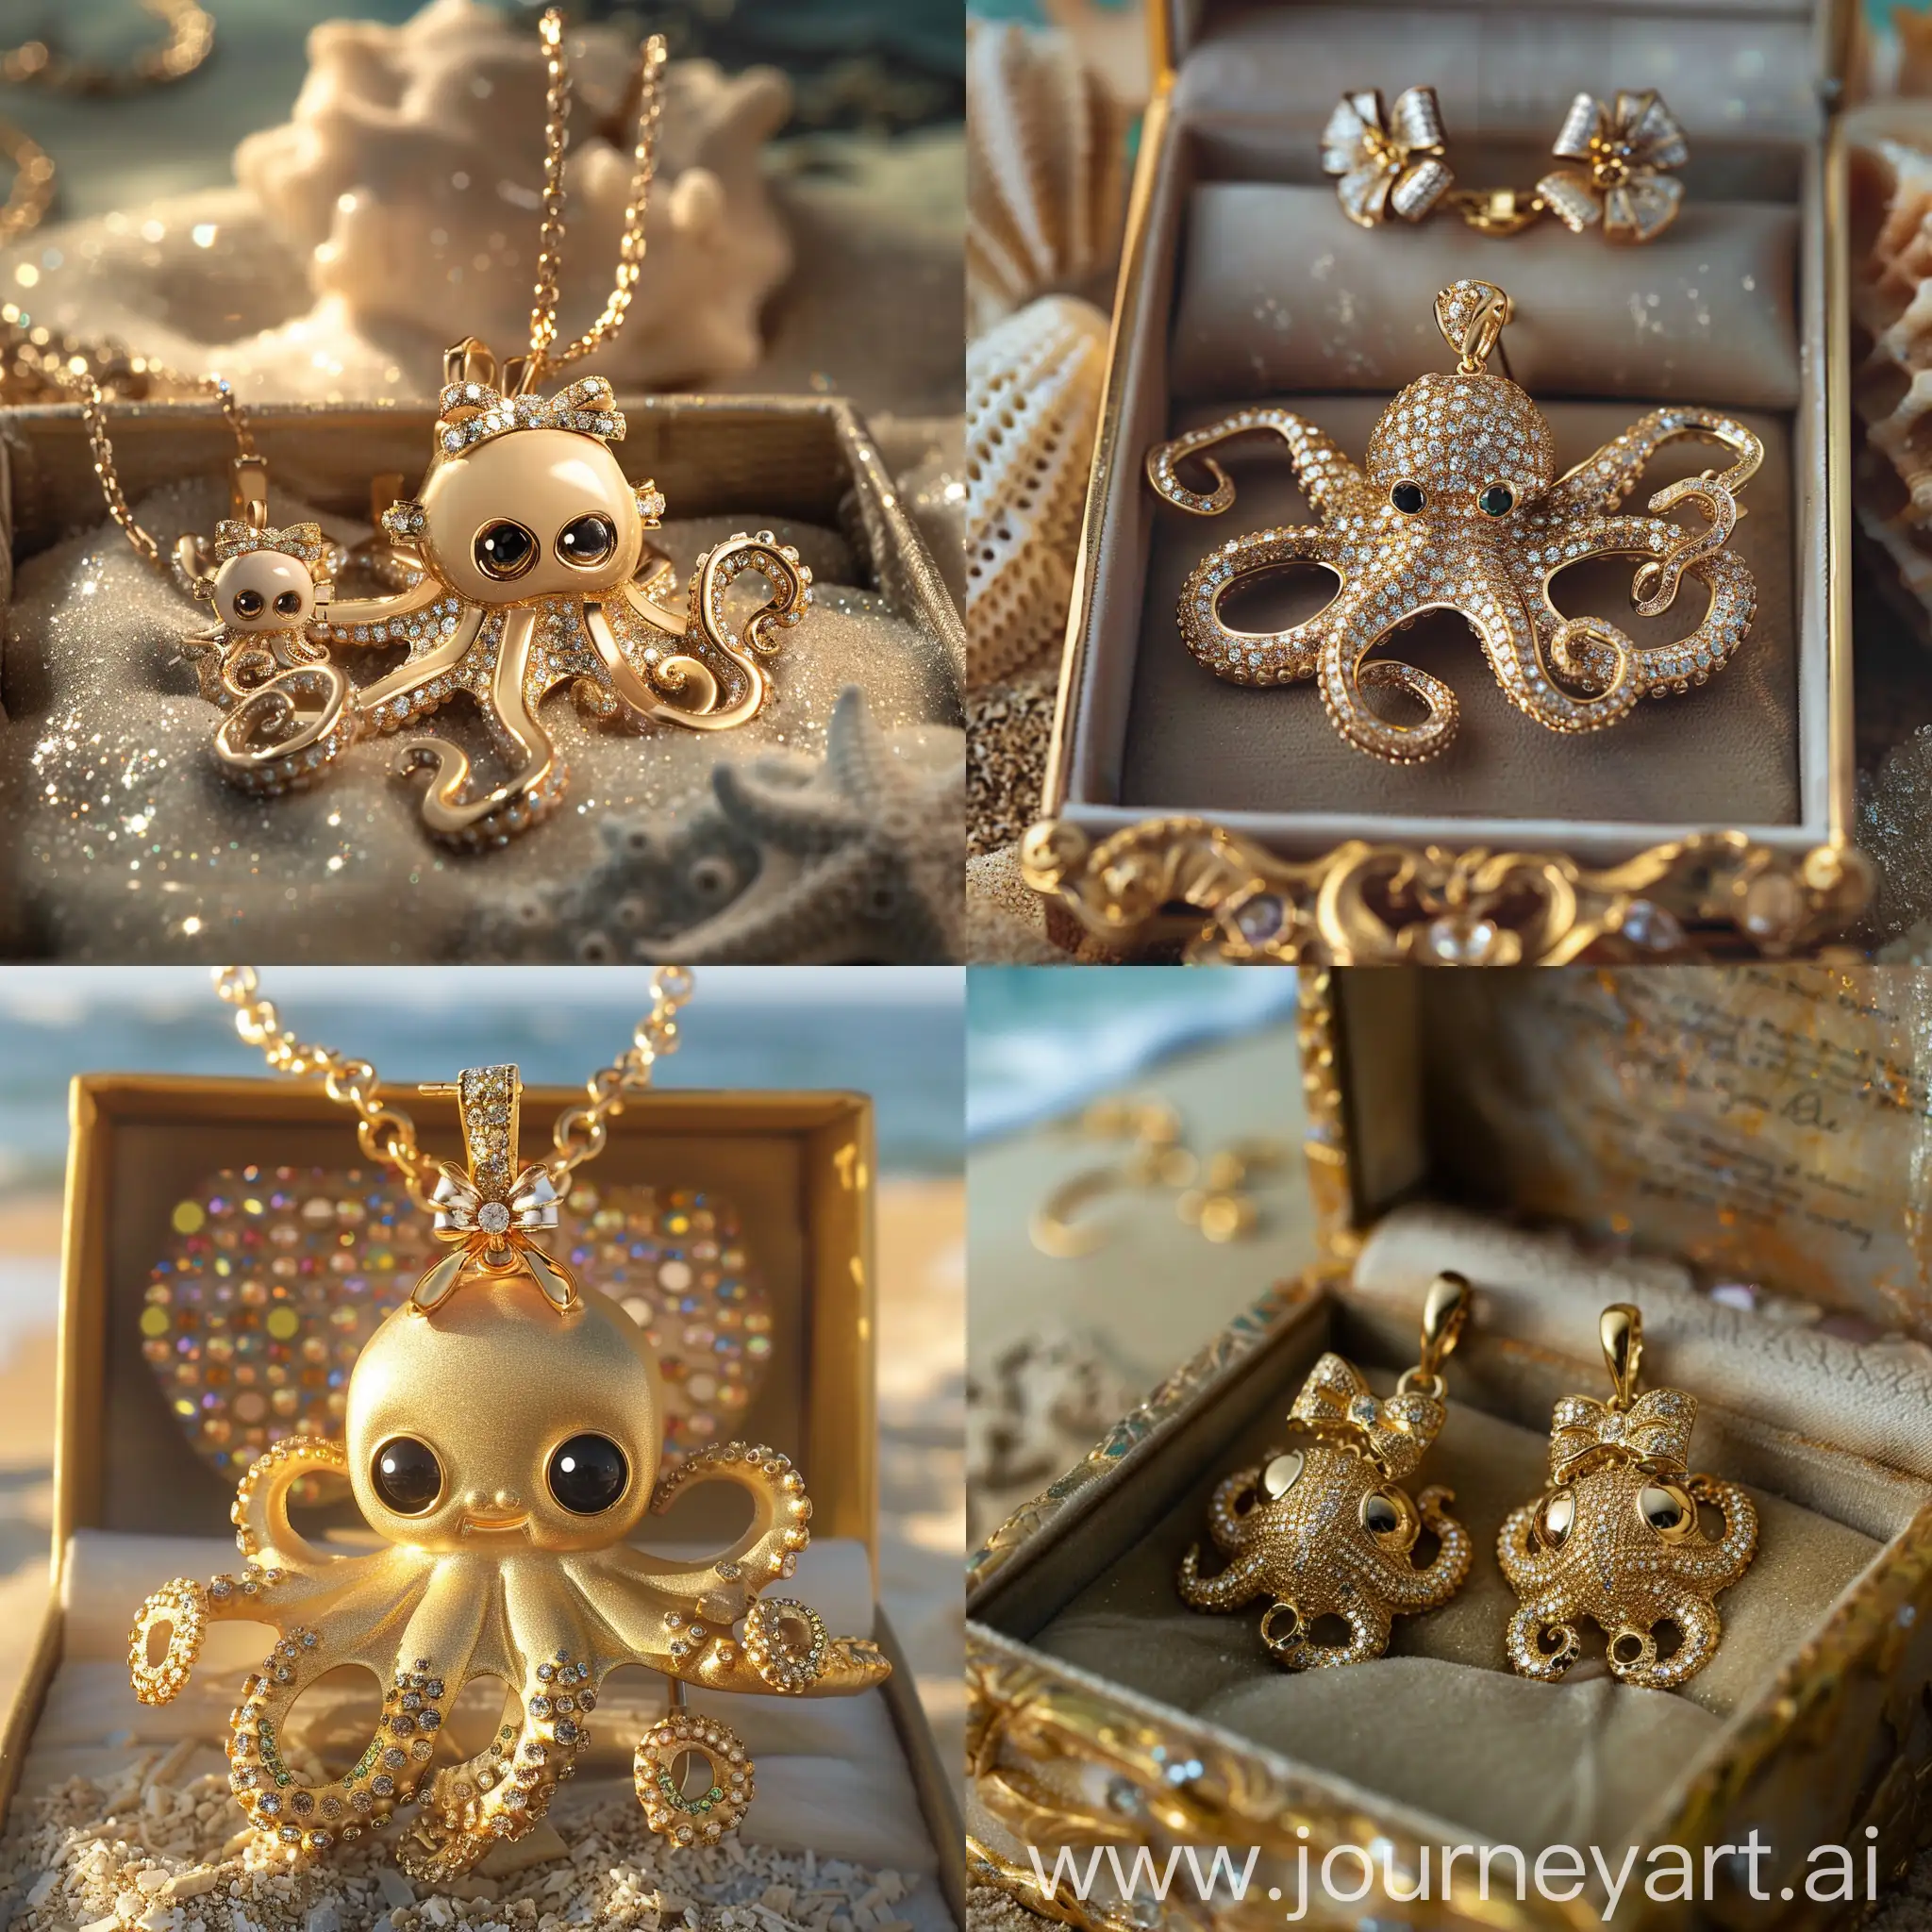 Adorable-Octopus-Pendant-and-Earrings-in-Fancy-Oceanthemed-Setting